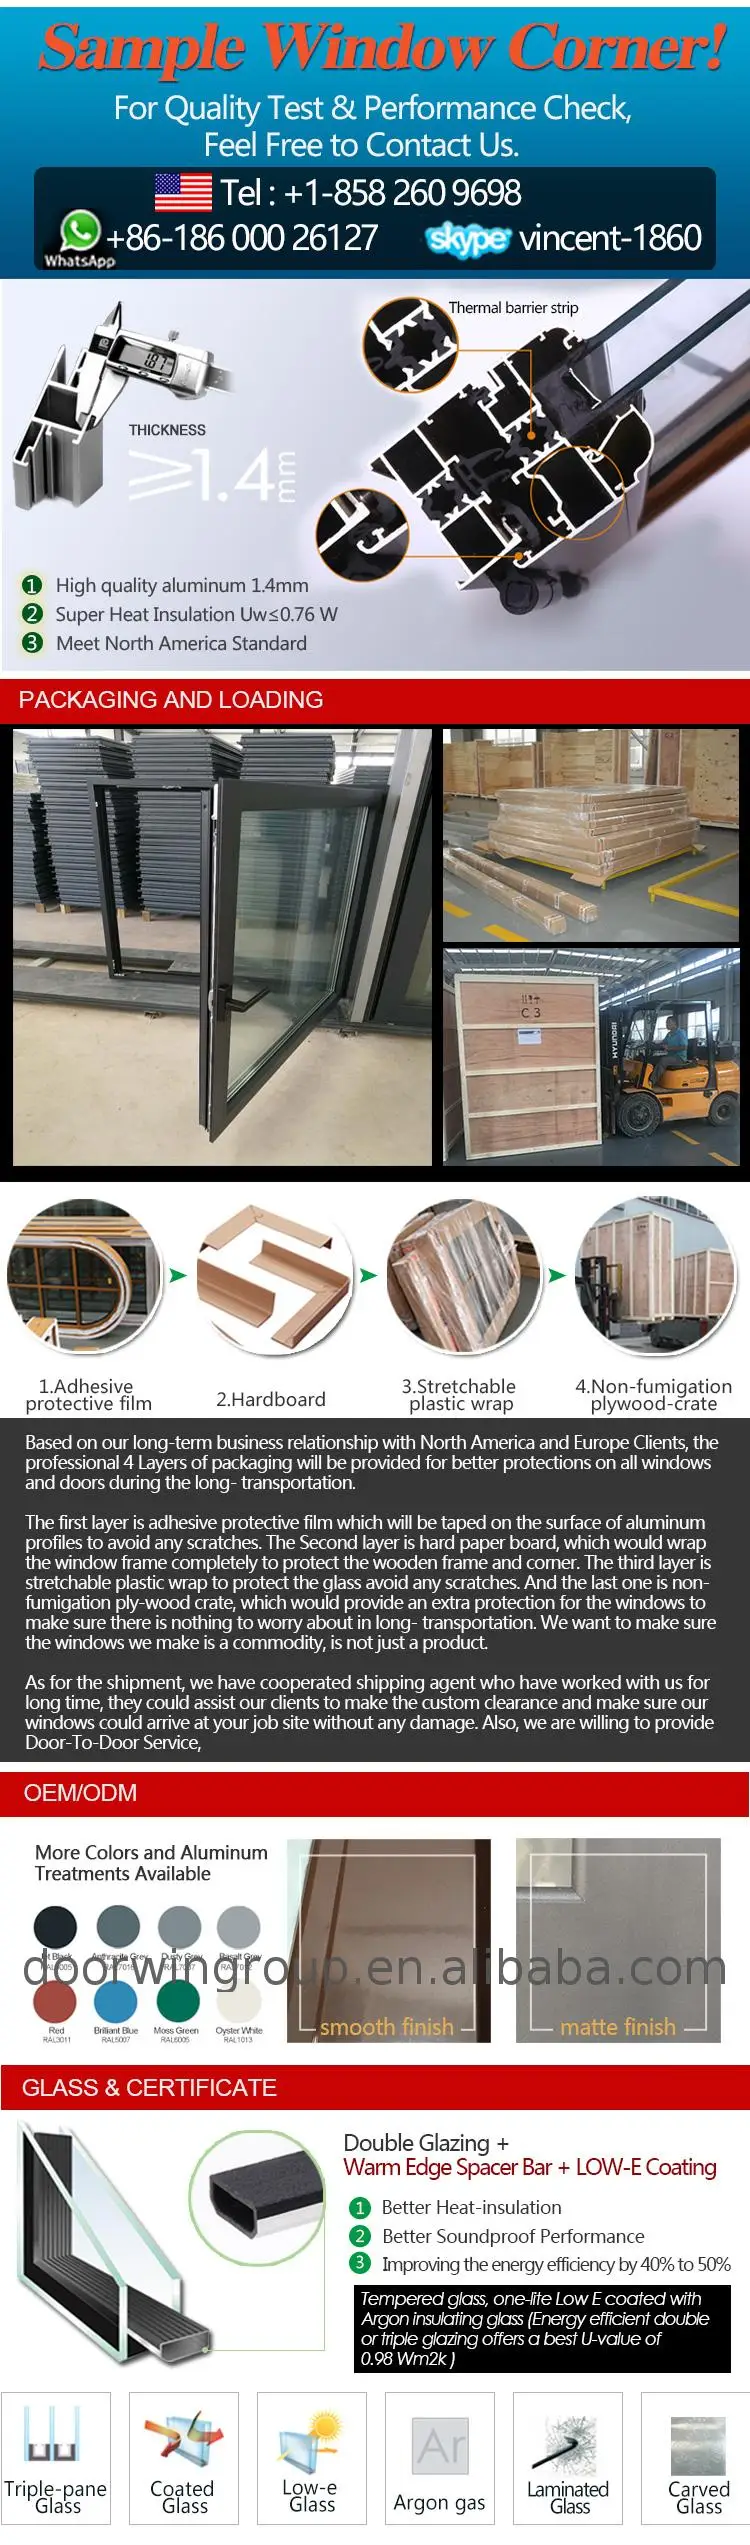 Doorwin Aluminum double tempered casement glass windows in low prices